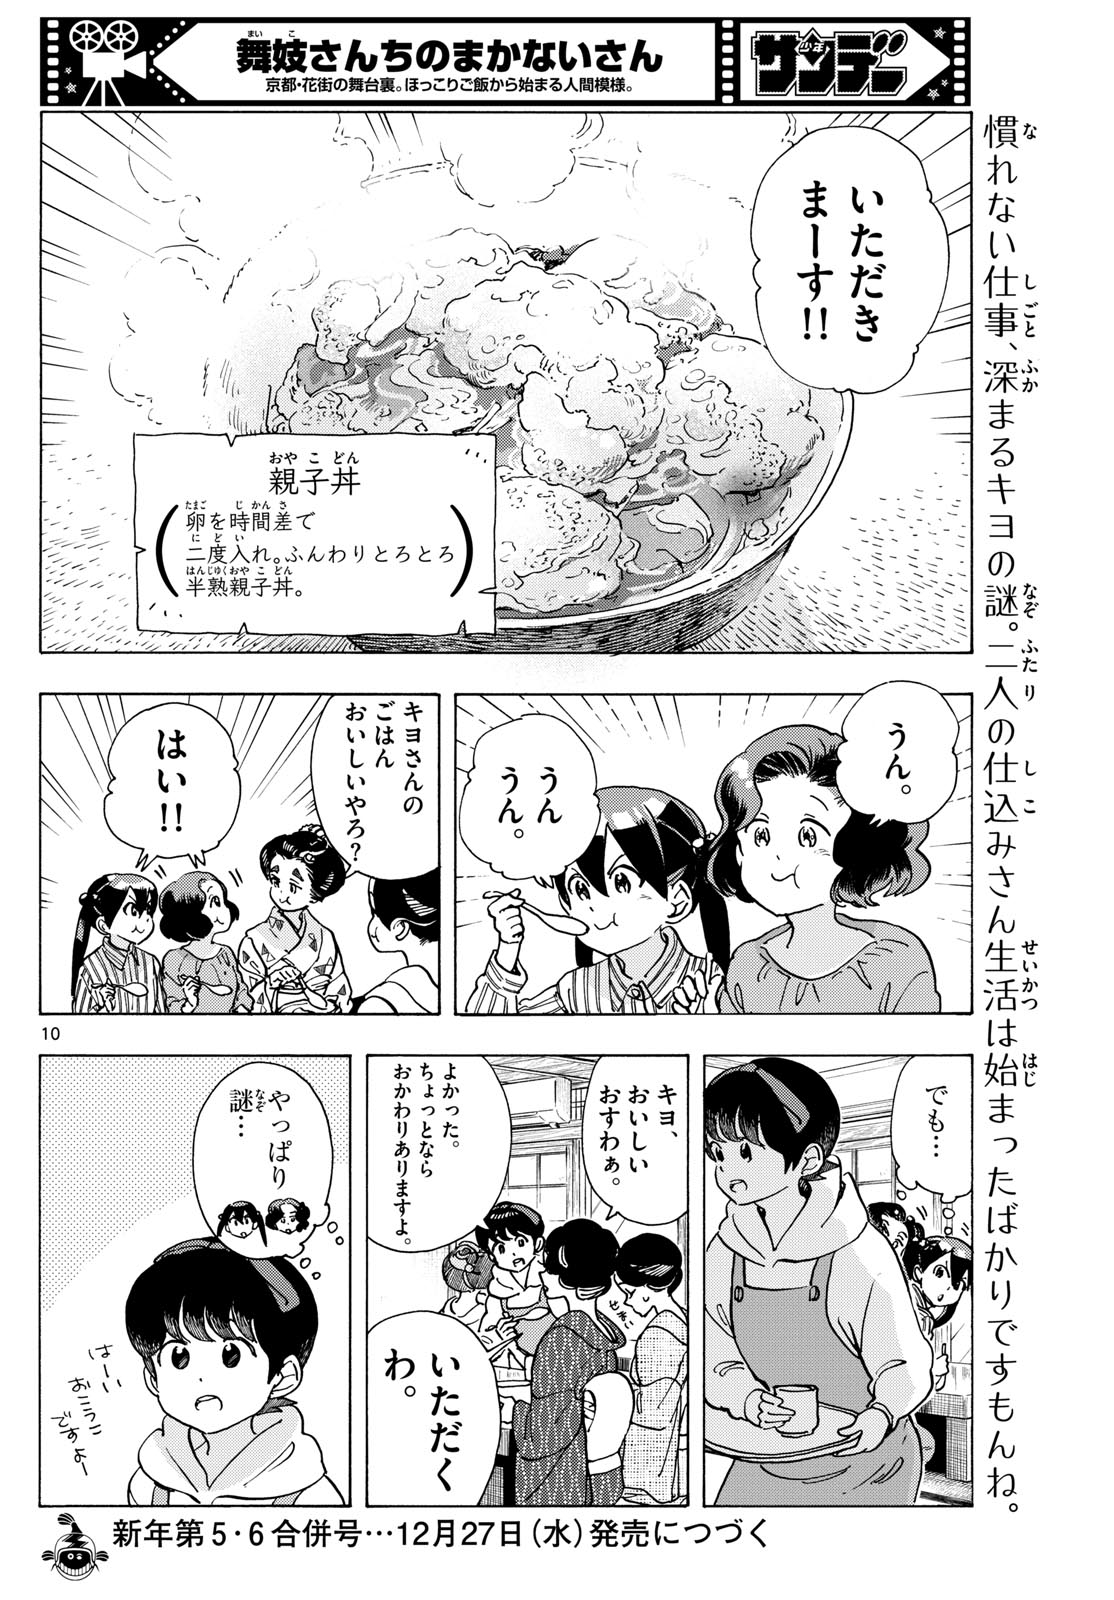 Maiko-san Chi no Makanai-san - Chapter 289 - Page 10